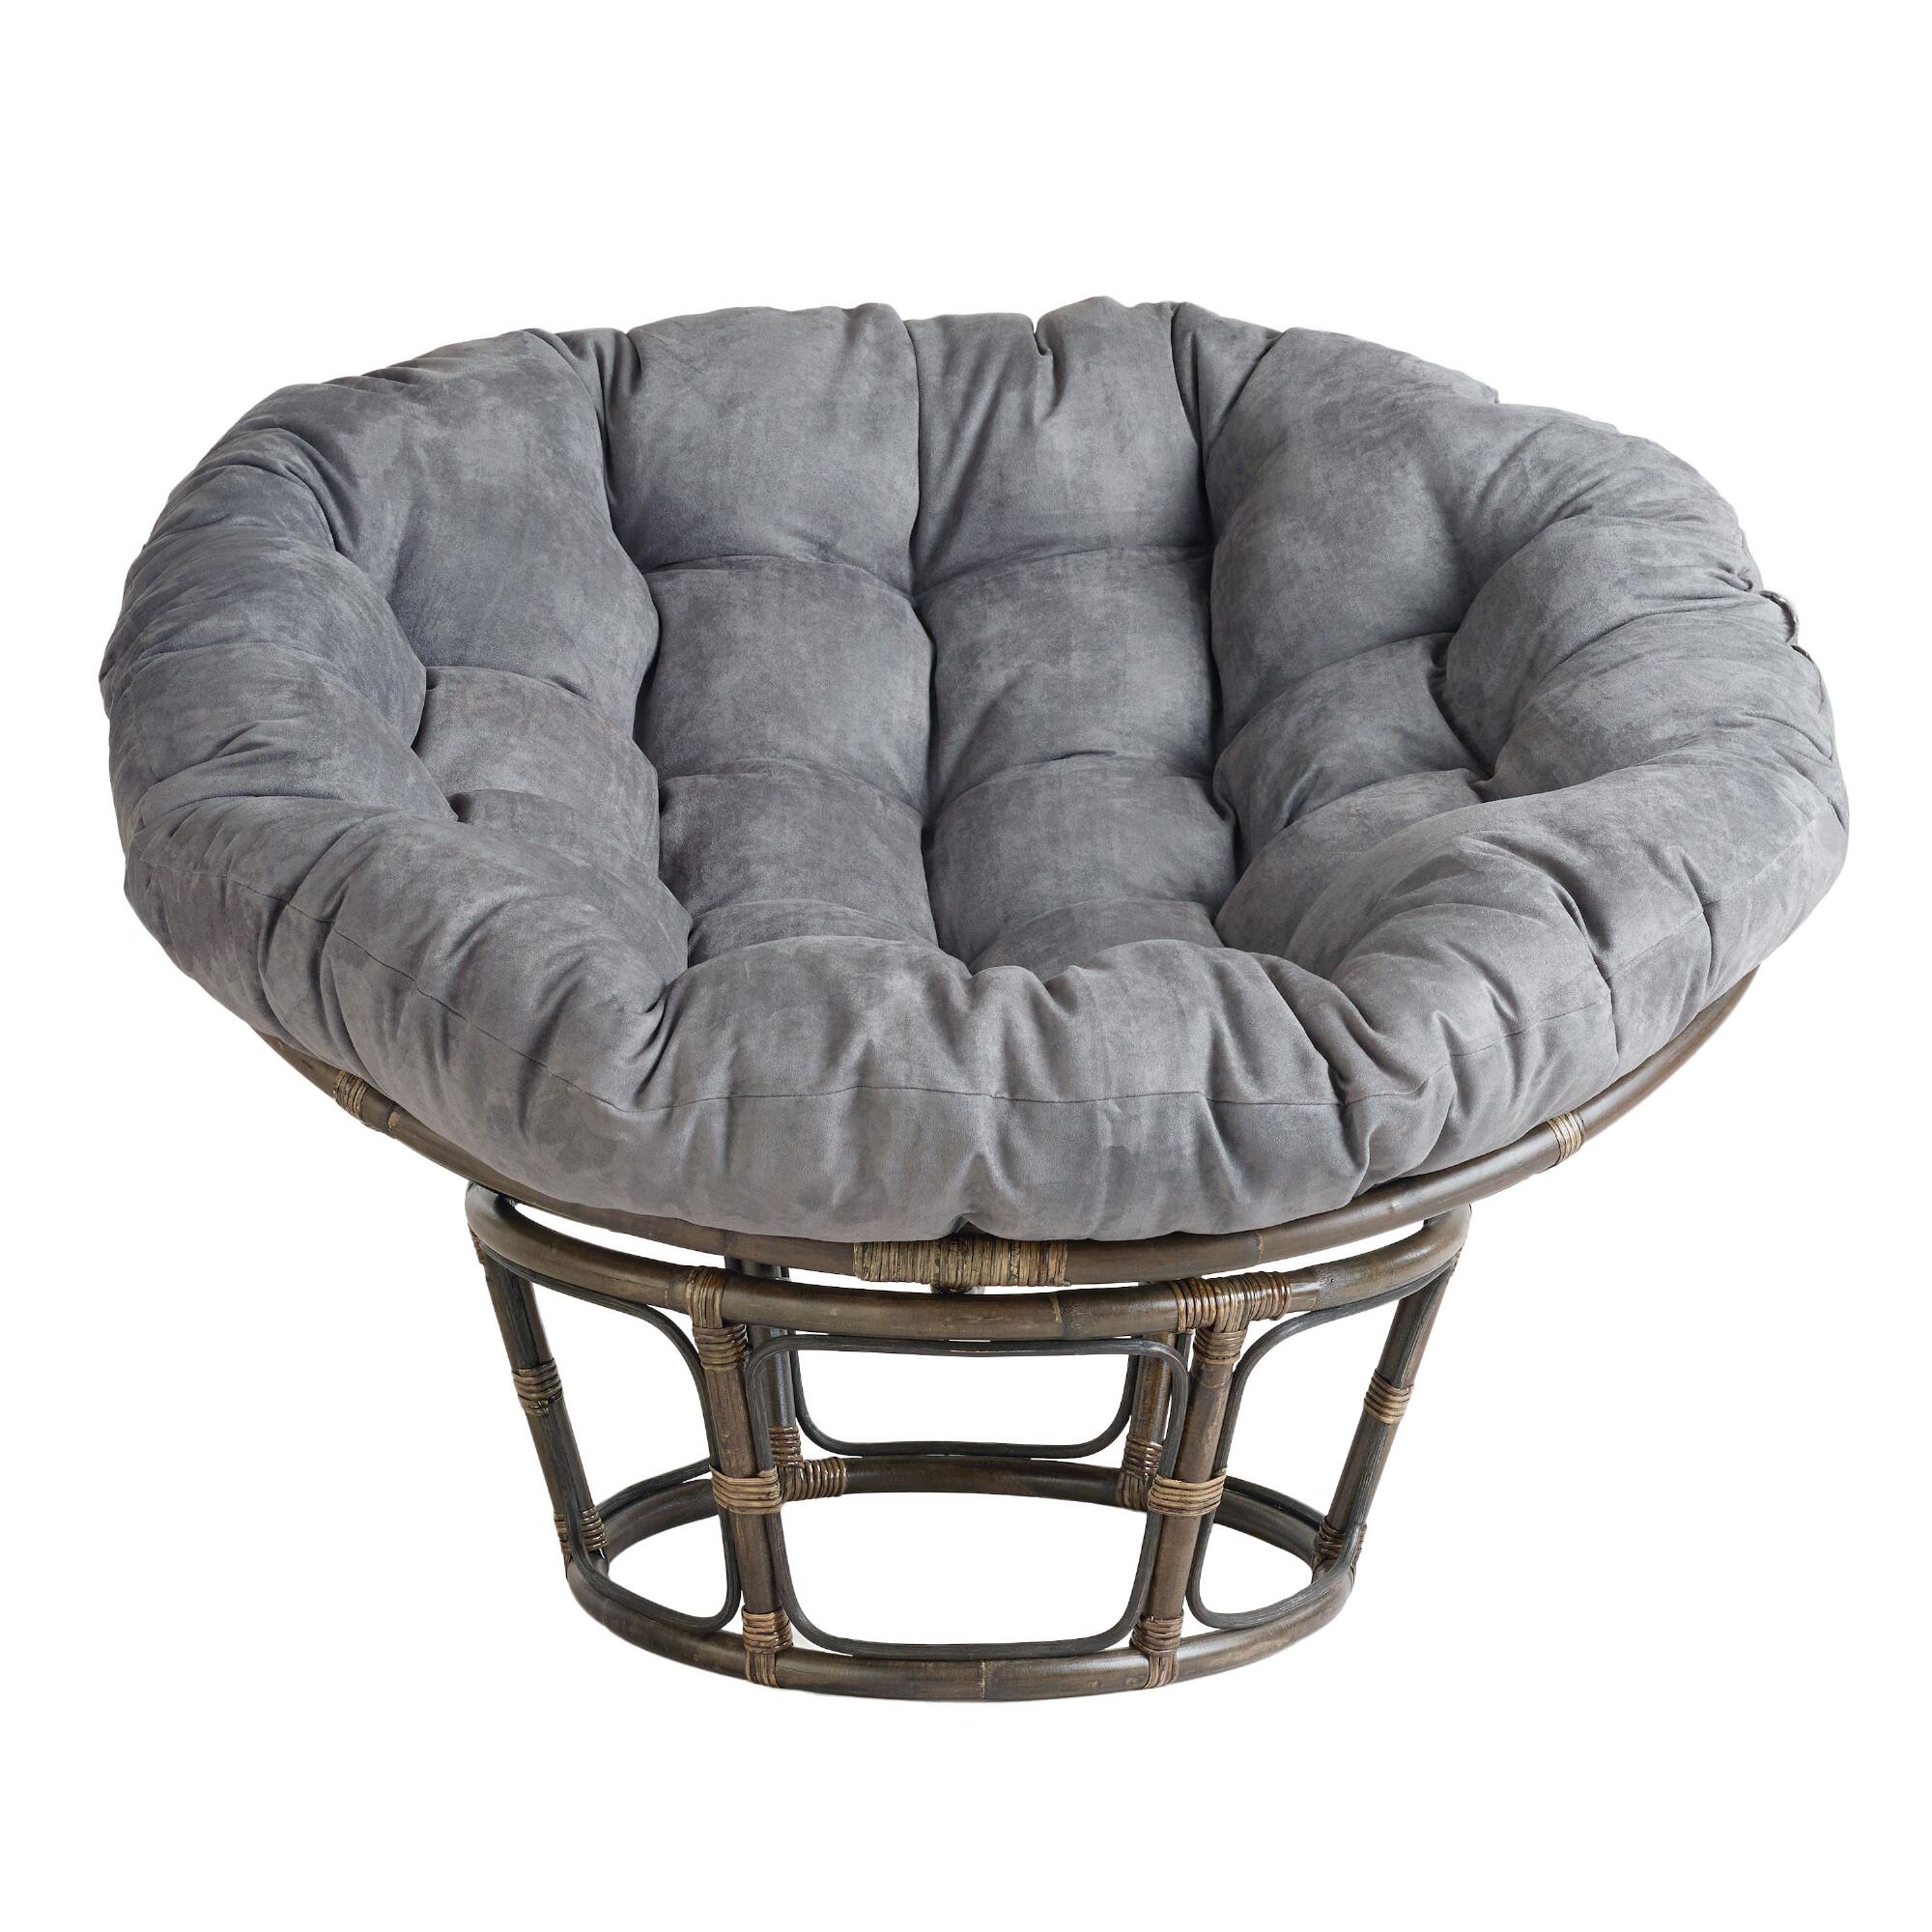 Charcoal Microsuede Papasan Chair Cushion: Gray - Microfiber by World Market